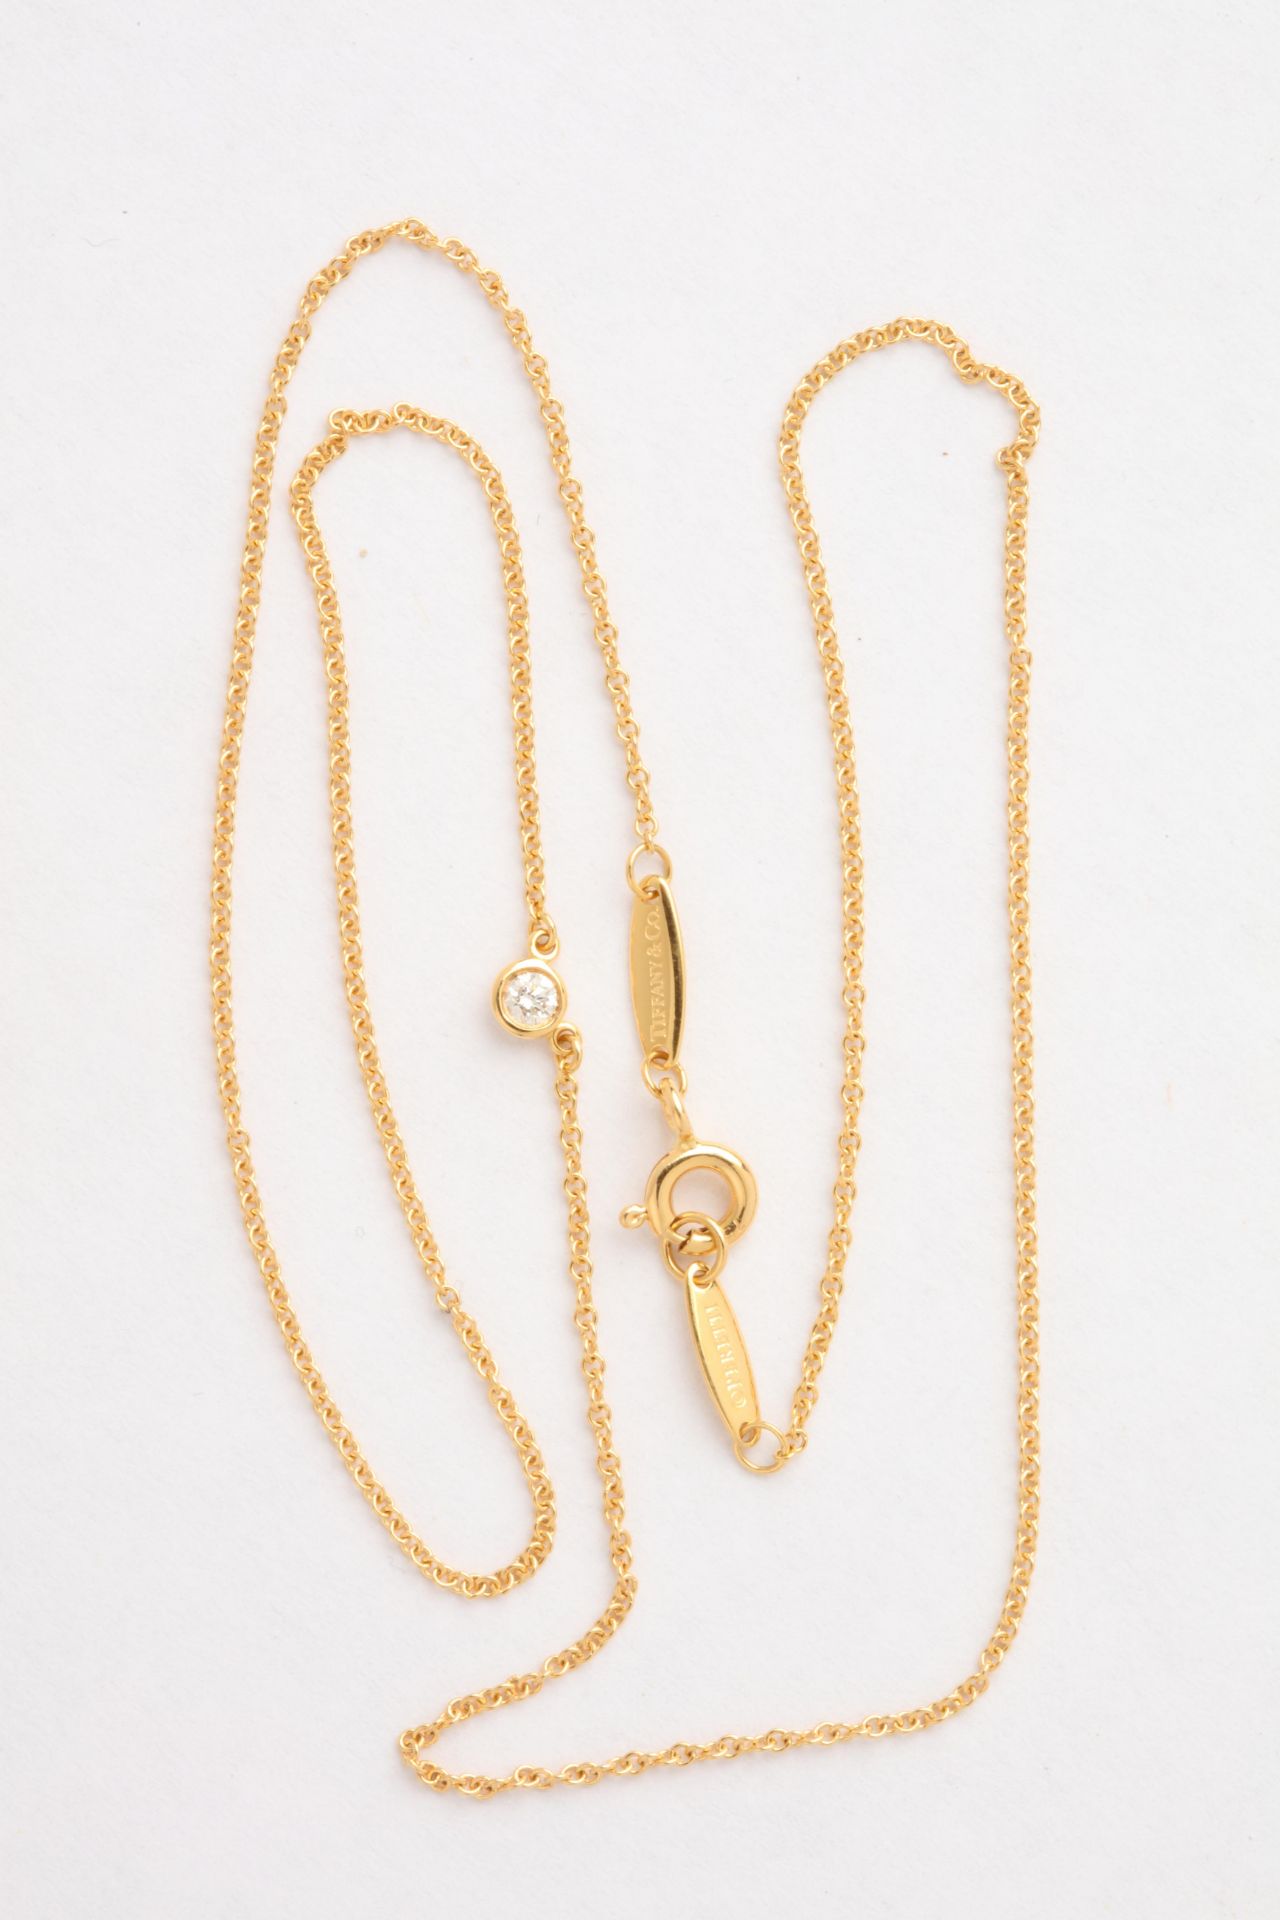 No VAT Tiffany & Co Elsa Peretti "Diamonds By The Yard" Single Diamond Necklace In 18K Yellow Gold - Image 2 of 3